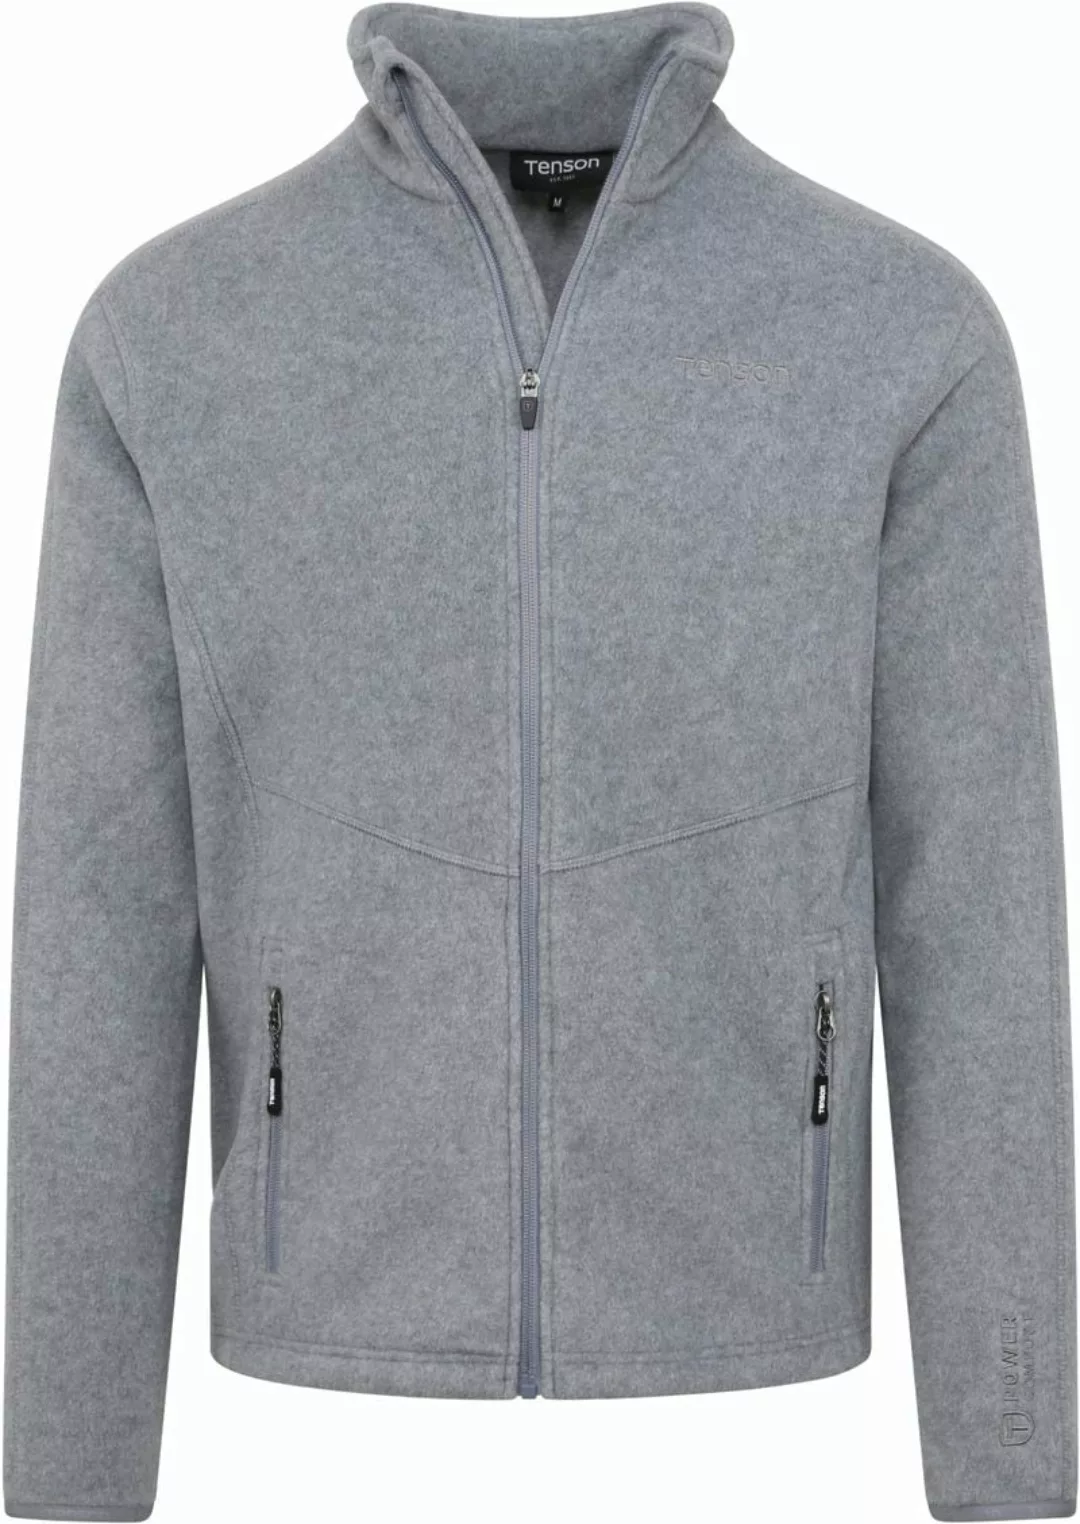 Tenson Miracle Fleece Jacke Grau - Größe M günstig online kaufen